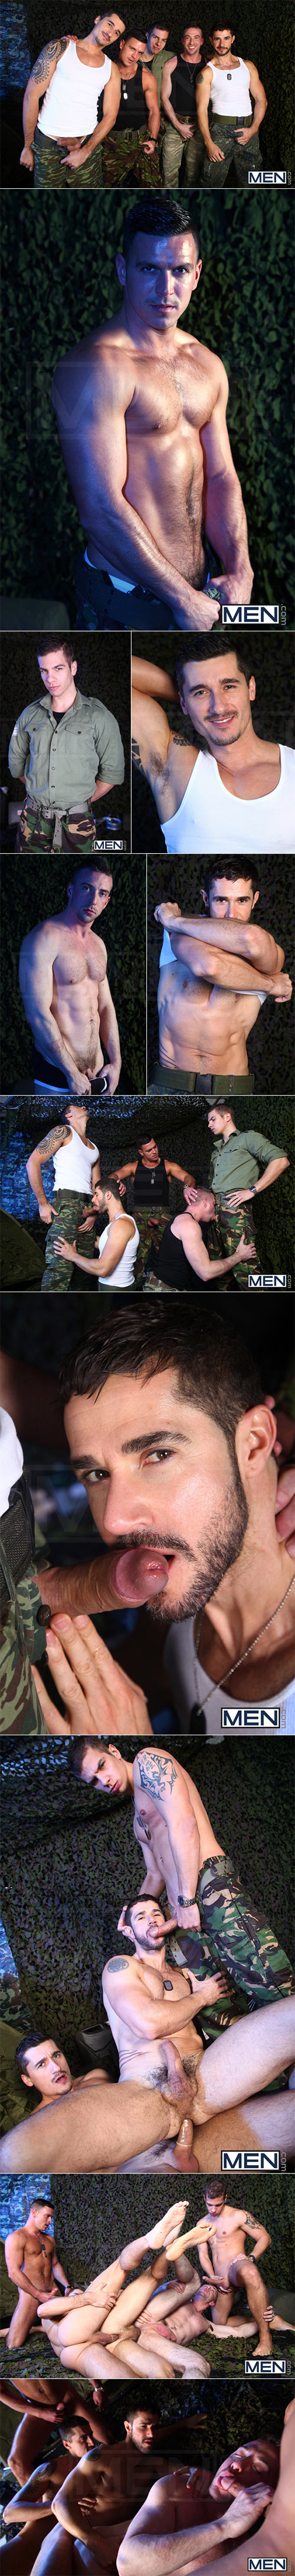 Men.com: Dean Monroe, Paddy O'Brian, Jay Roberts, Paul Walker and Scott Hunter in "The Drill Sergeant 3"